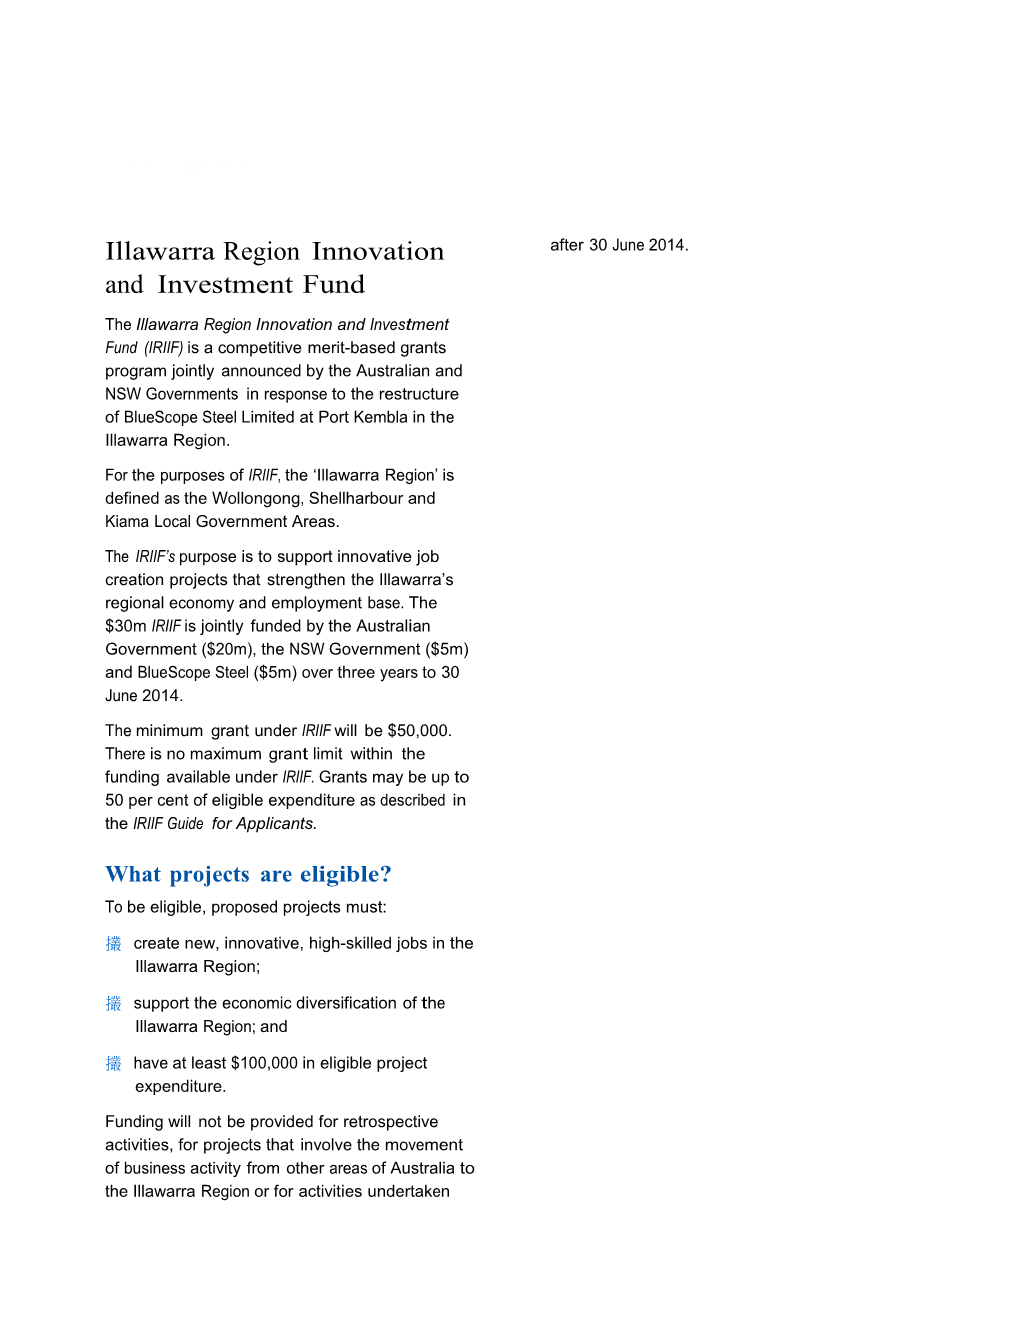 Illawarra Region Innovation and Investment Fund - Fact Sheet